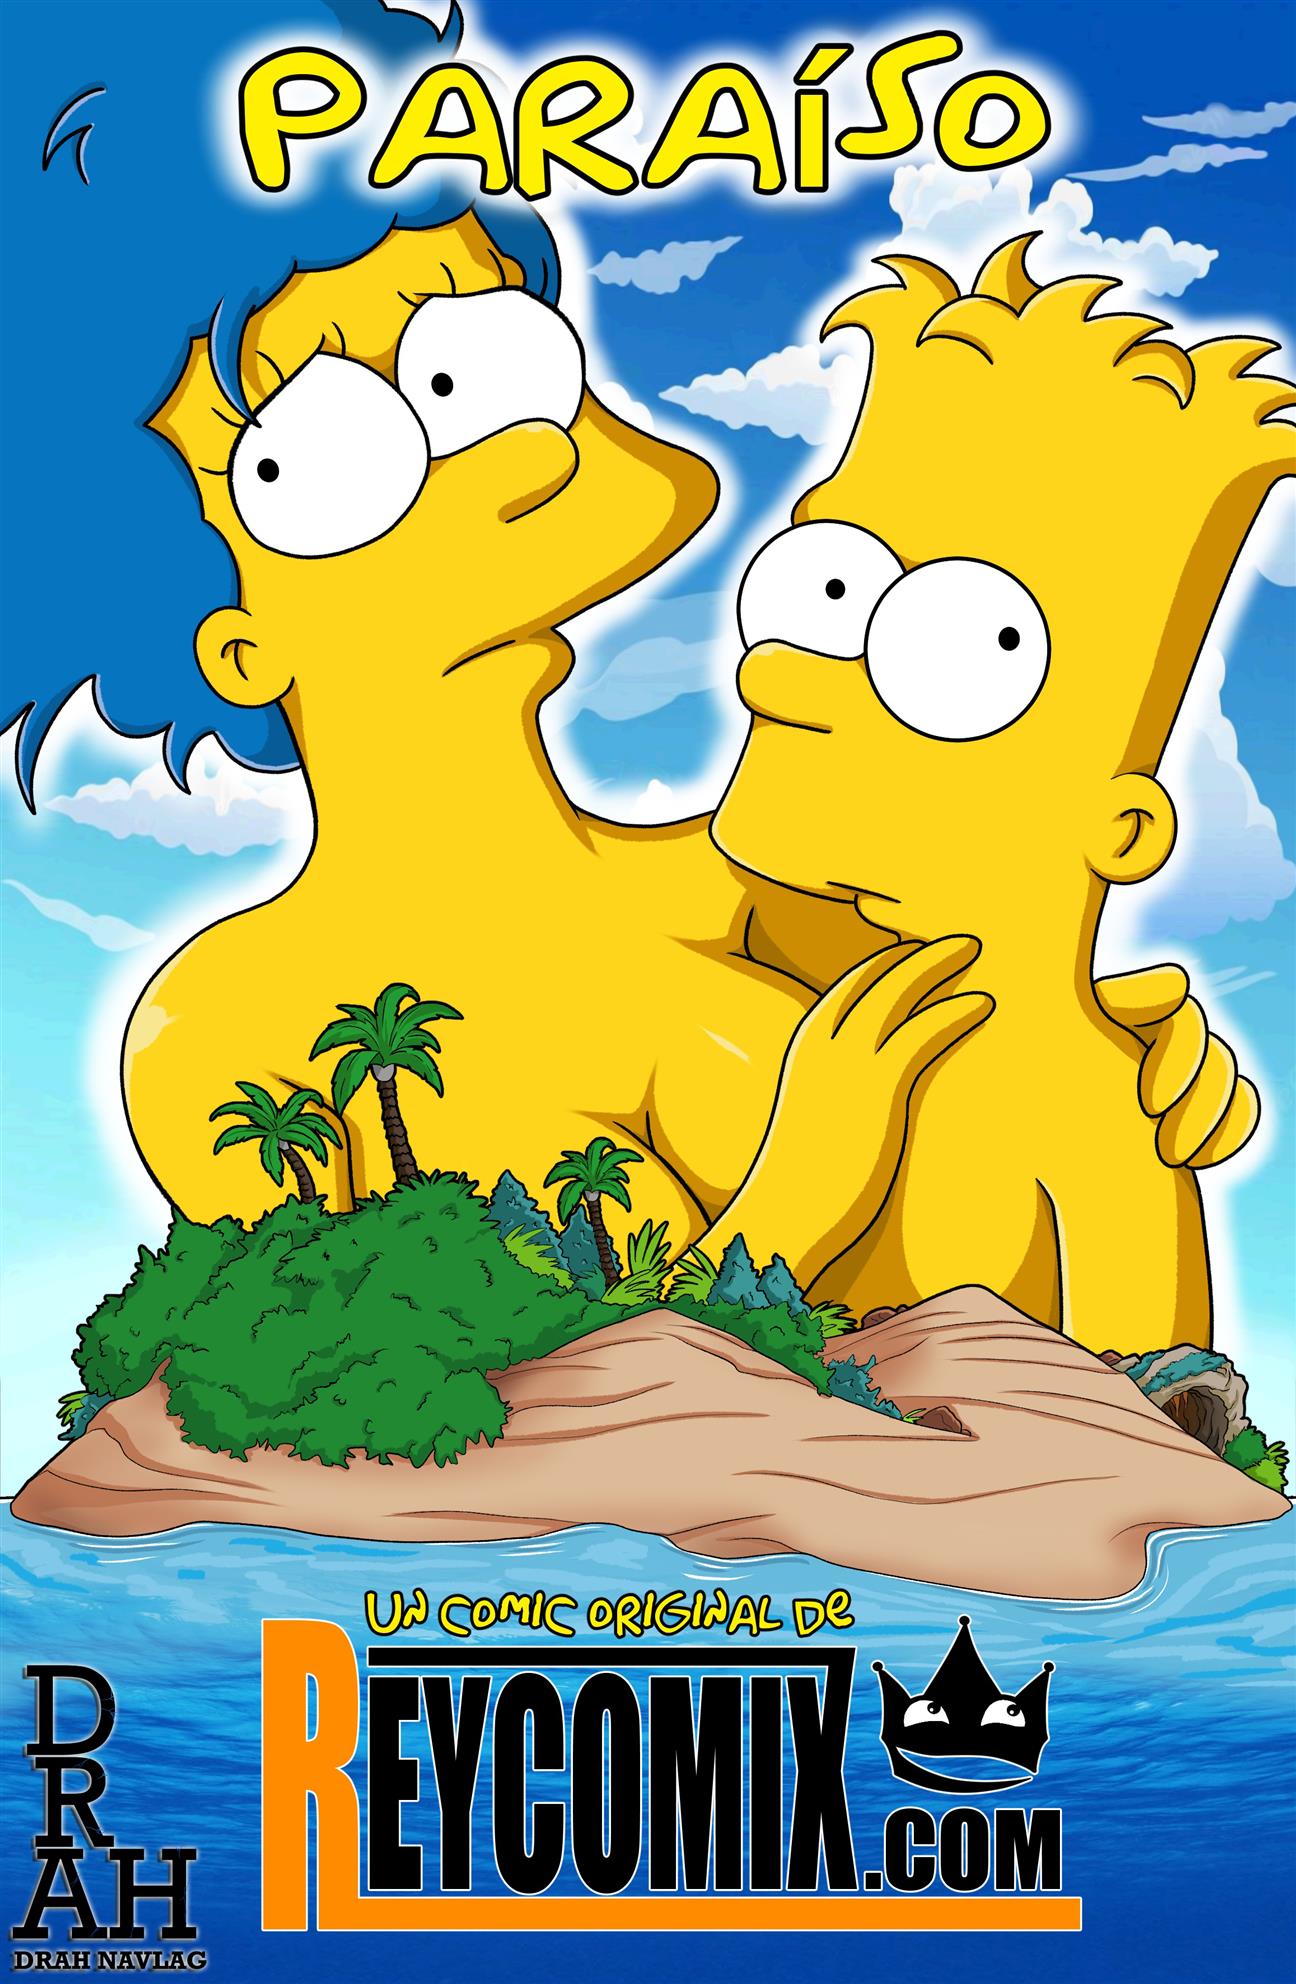 Simpsons sexo hq